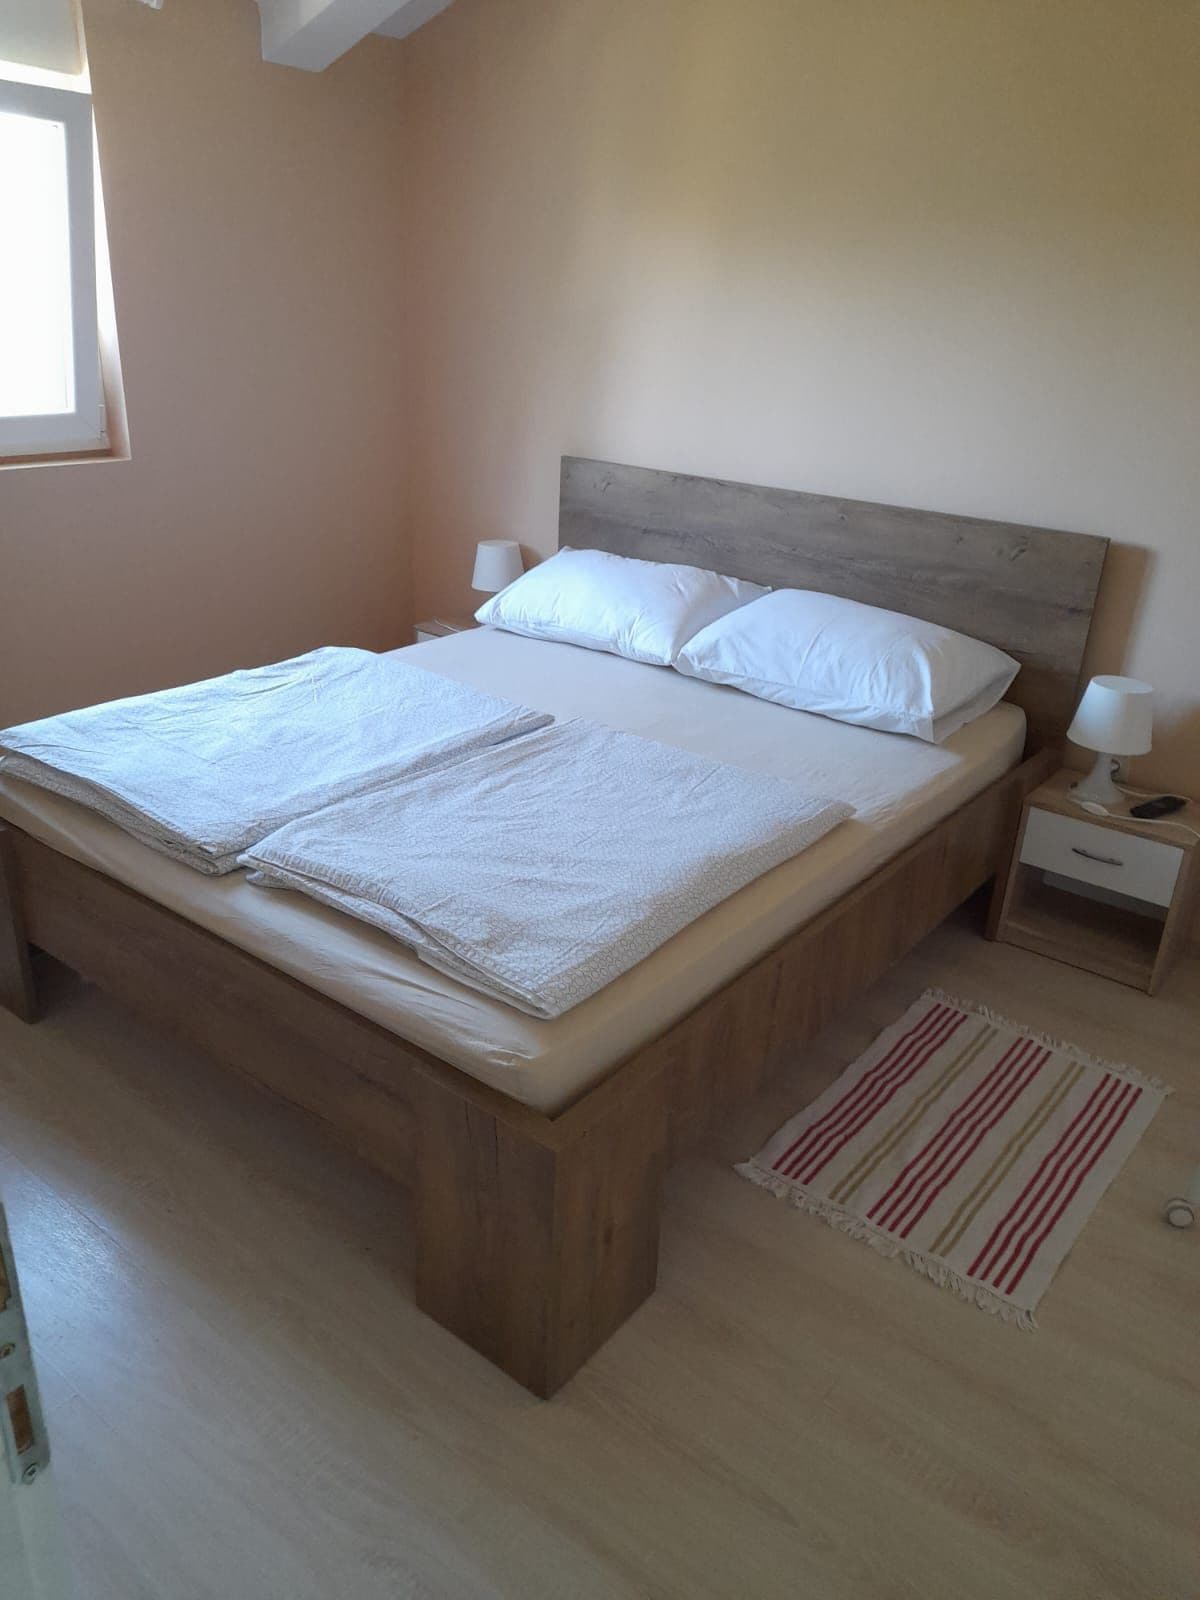 Vrsi House rentals - Zadar County, Croatia | Airbnb